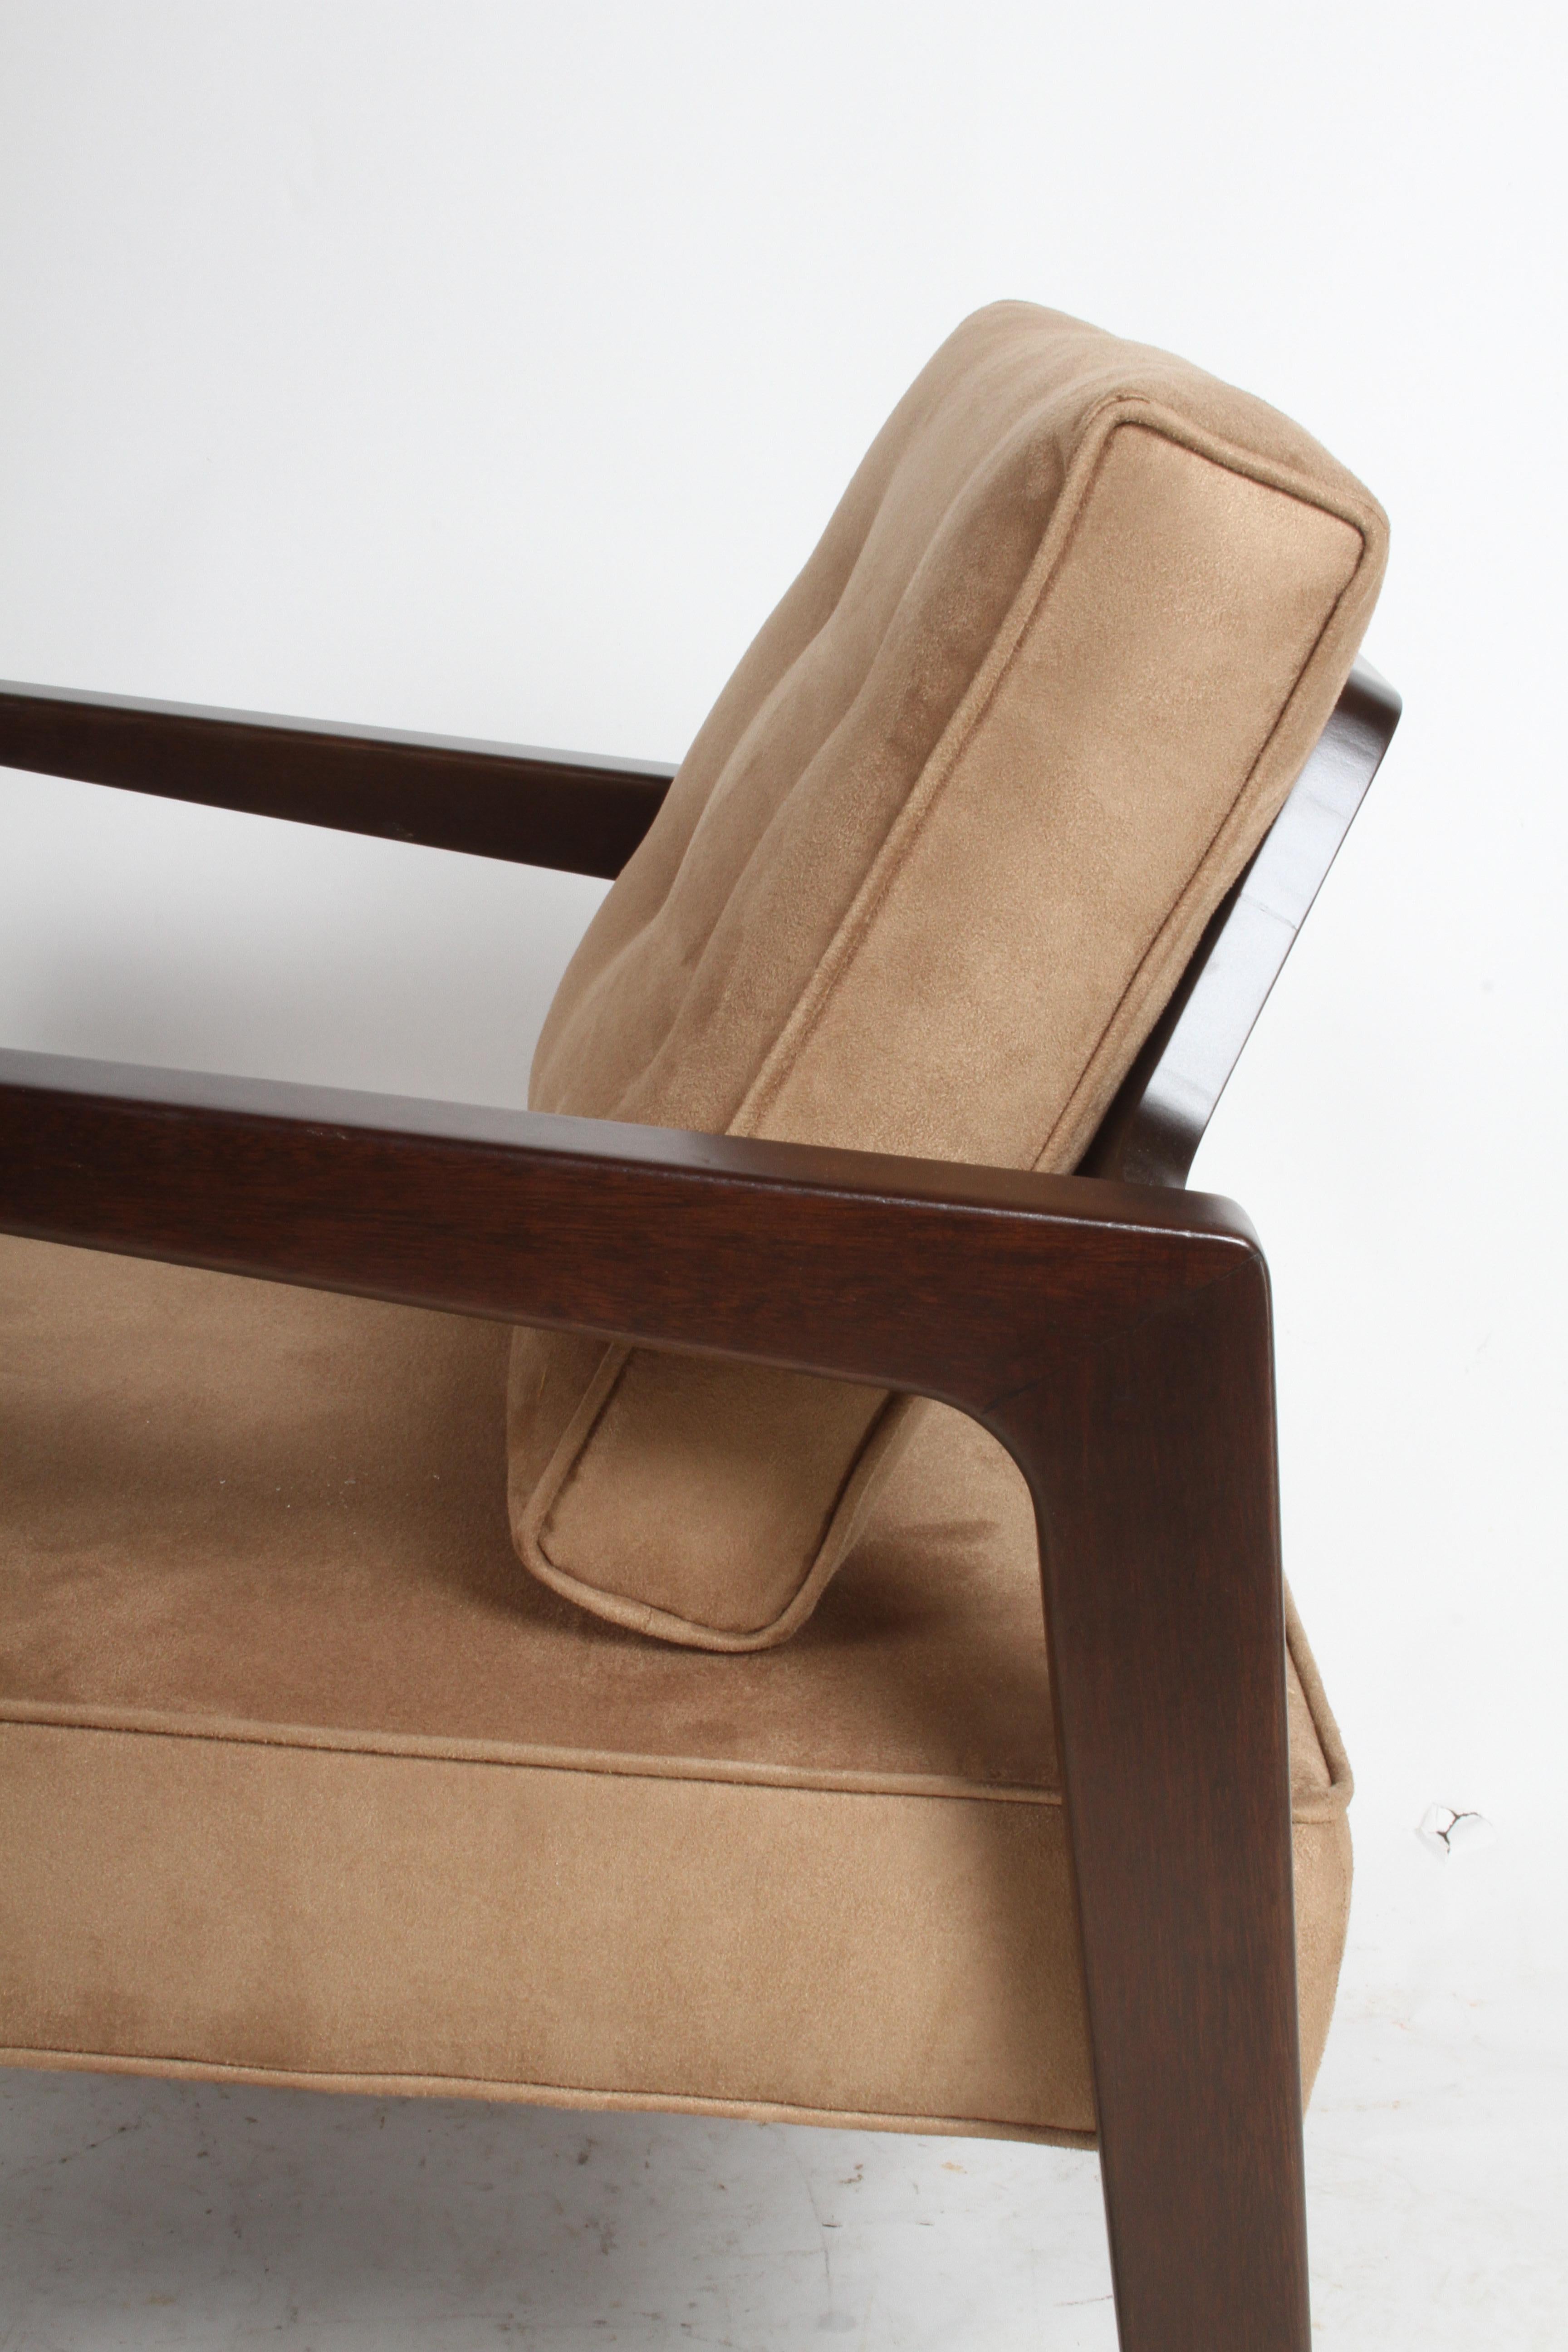 Harvey Probber Asymmetrical Lounge Chair 3